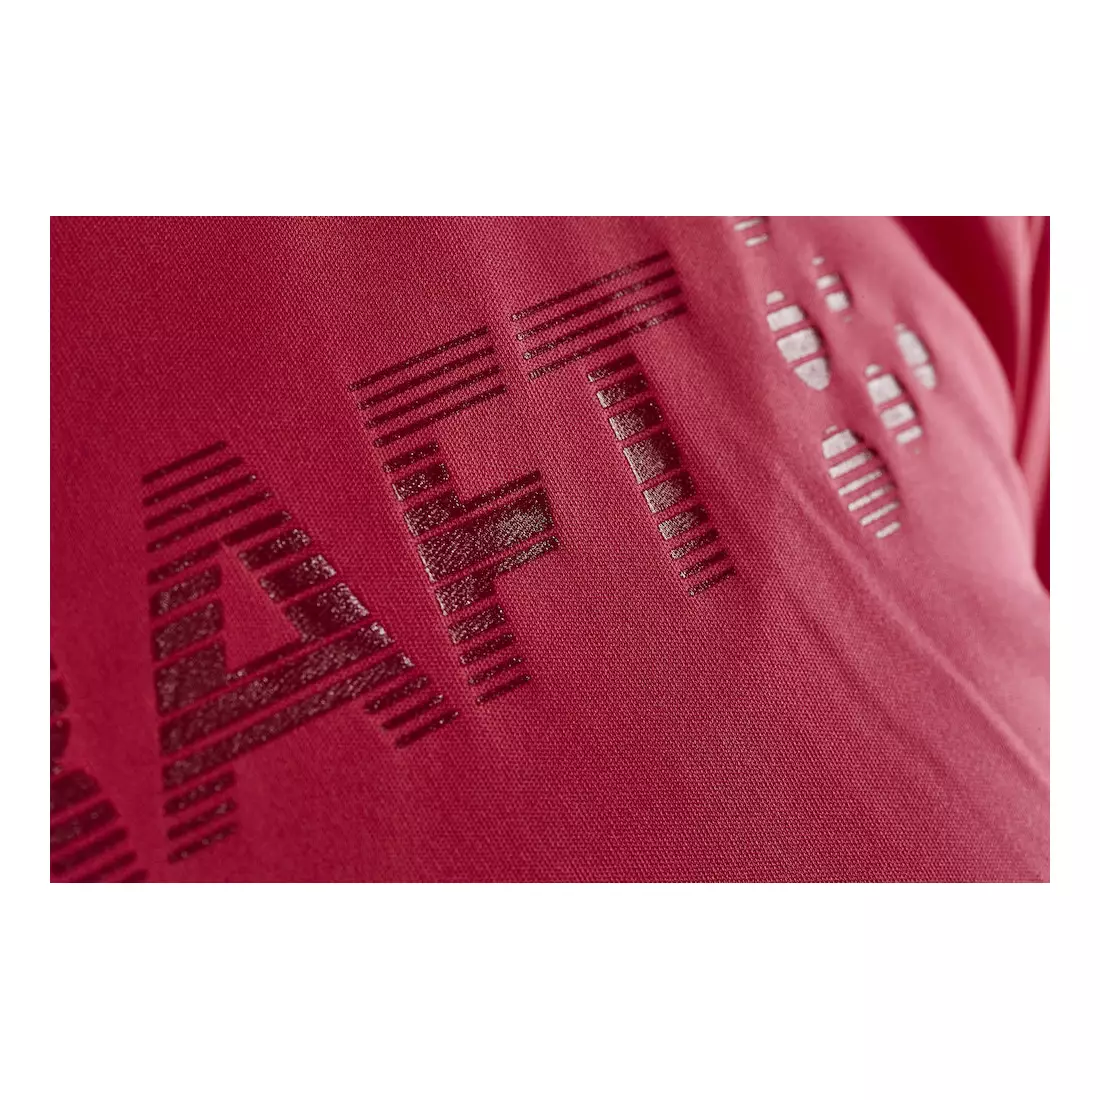 CRAFT Prime Logo 1904342 -1411 women's running T-shirt